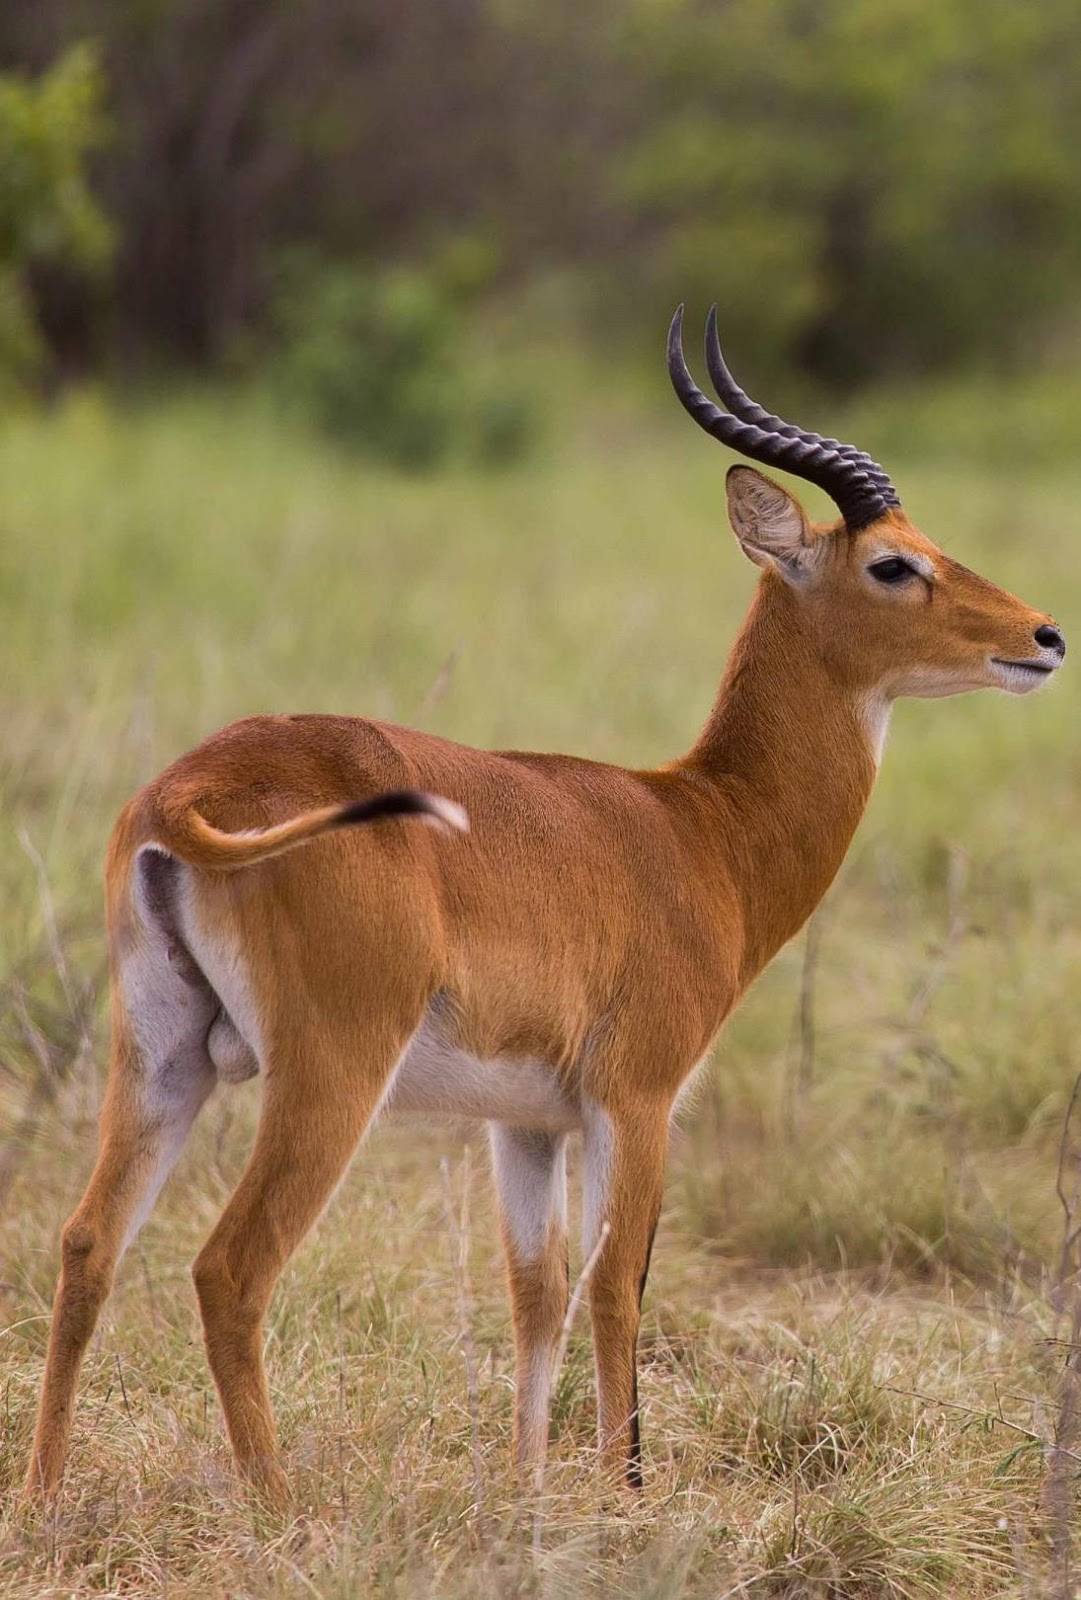 An antelope on the savanna plains.